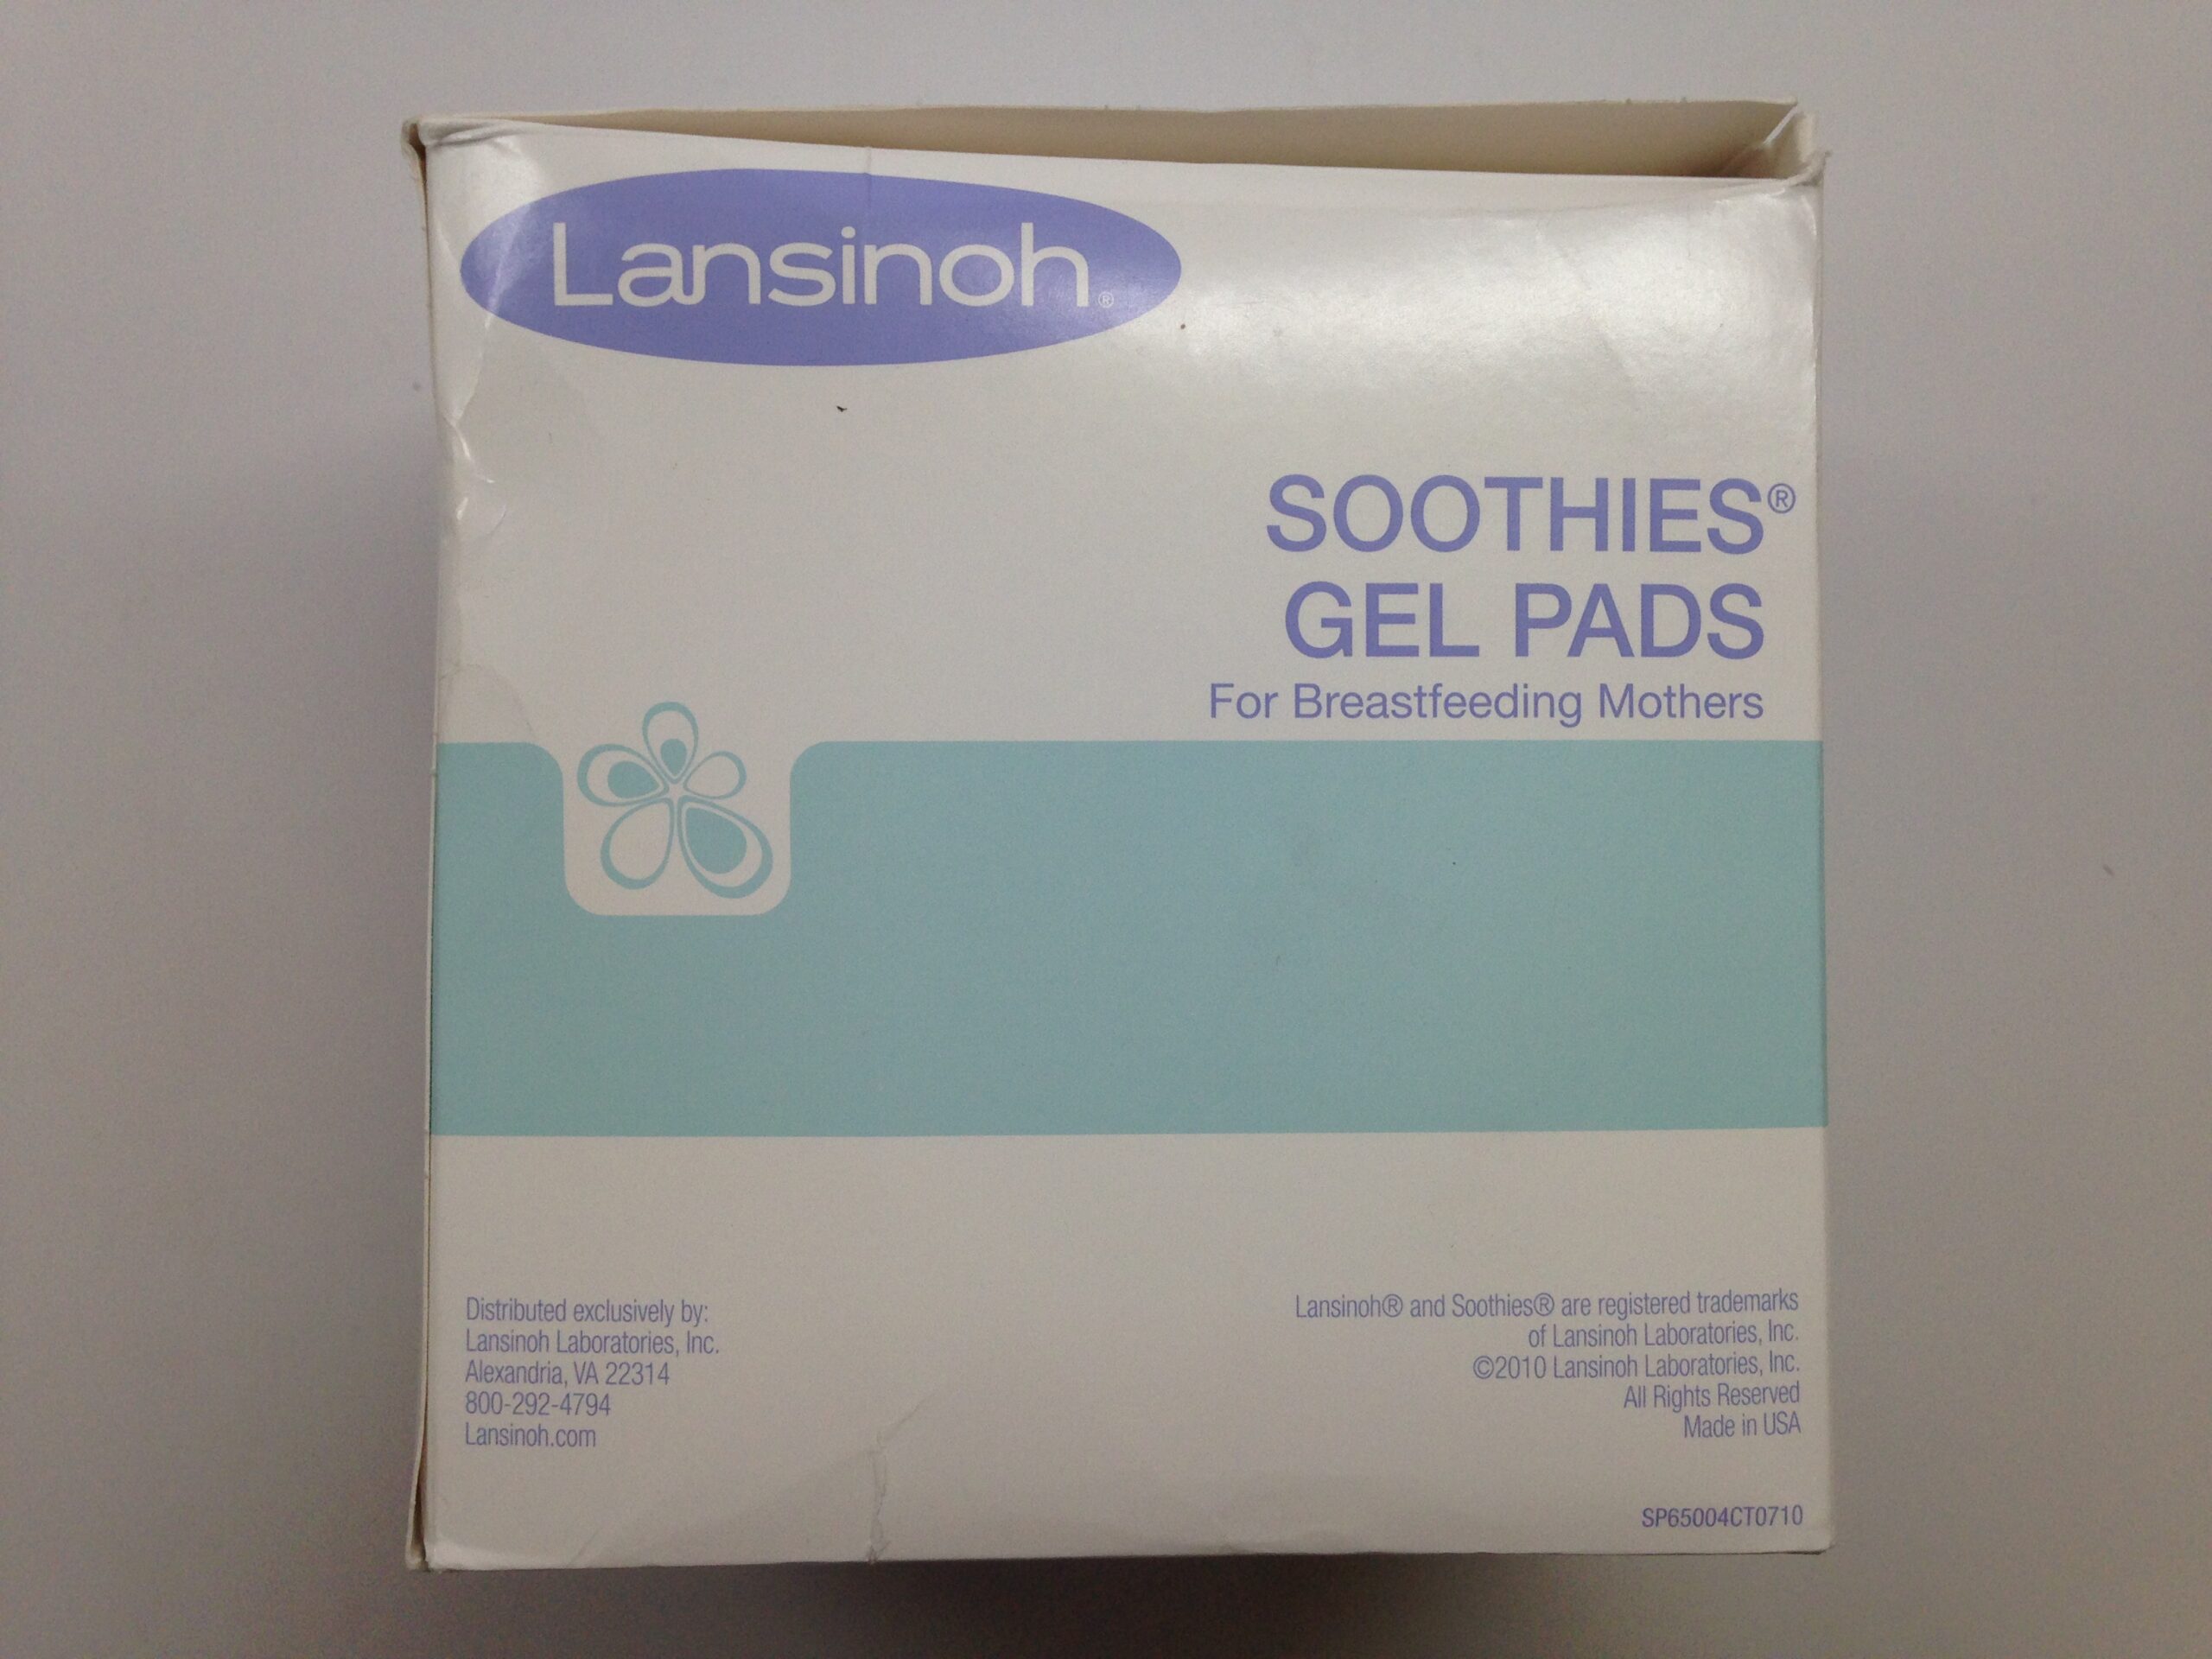 Lansinoh Laboratories Soothies Gel Pads, 6 Count